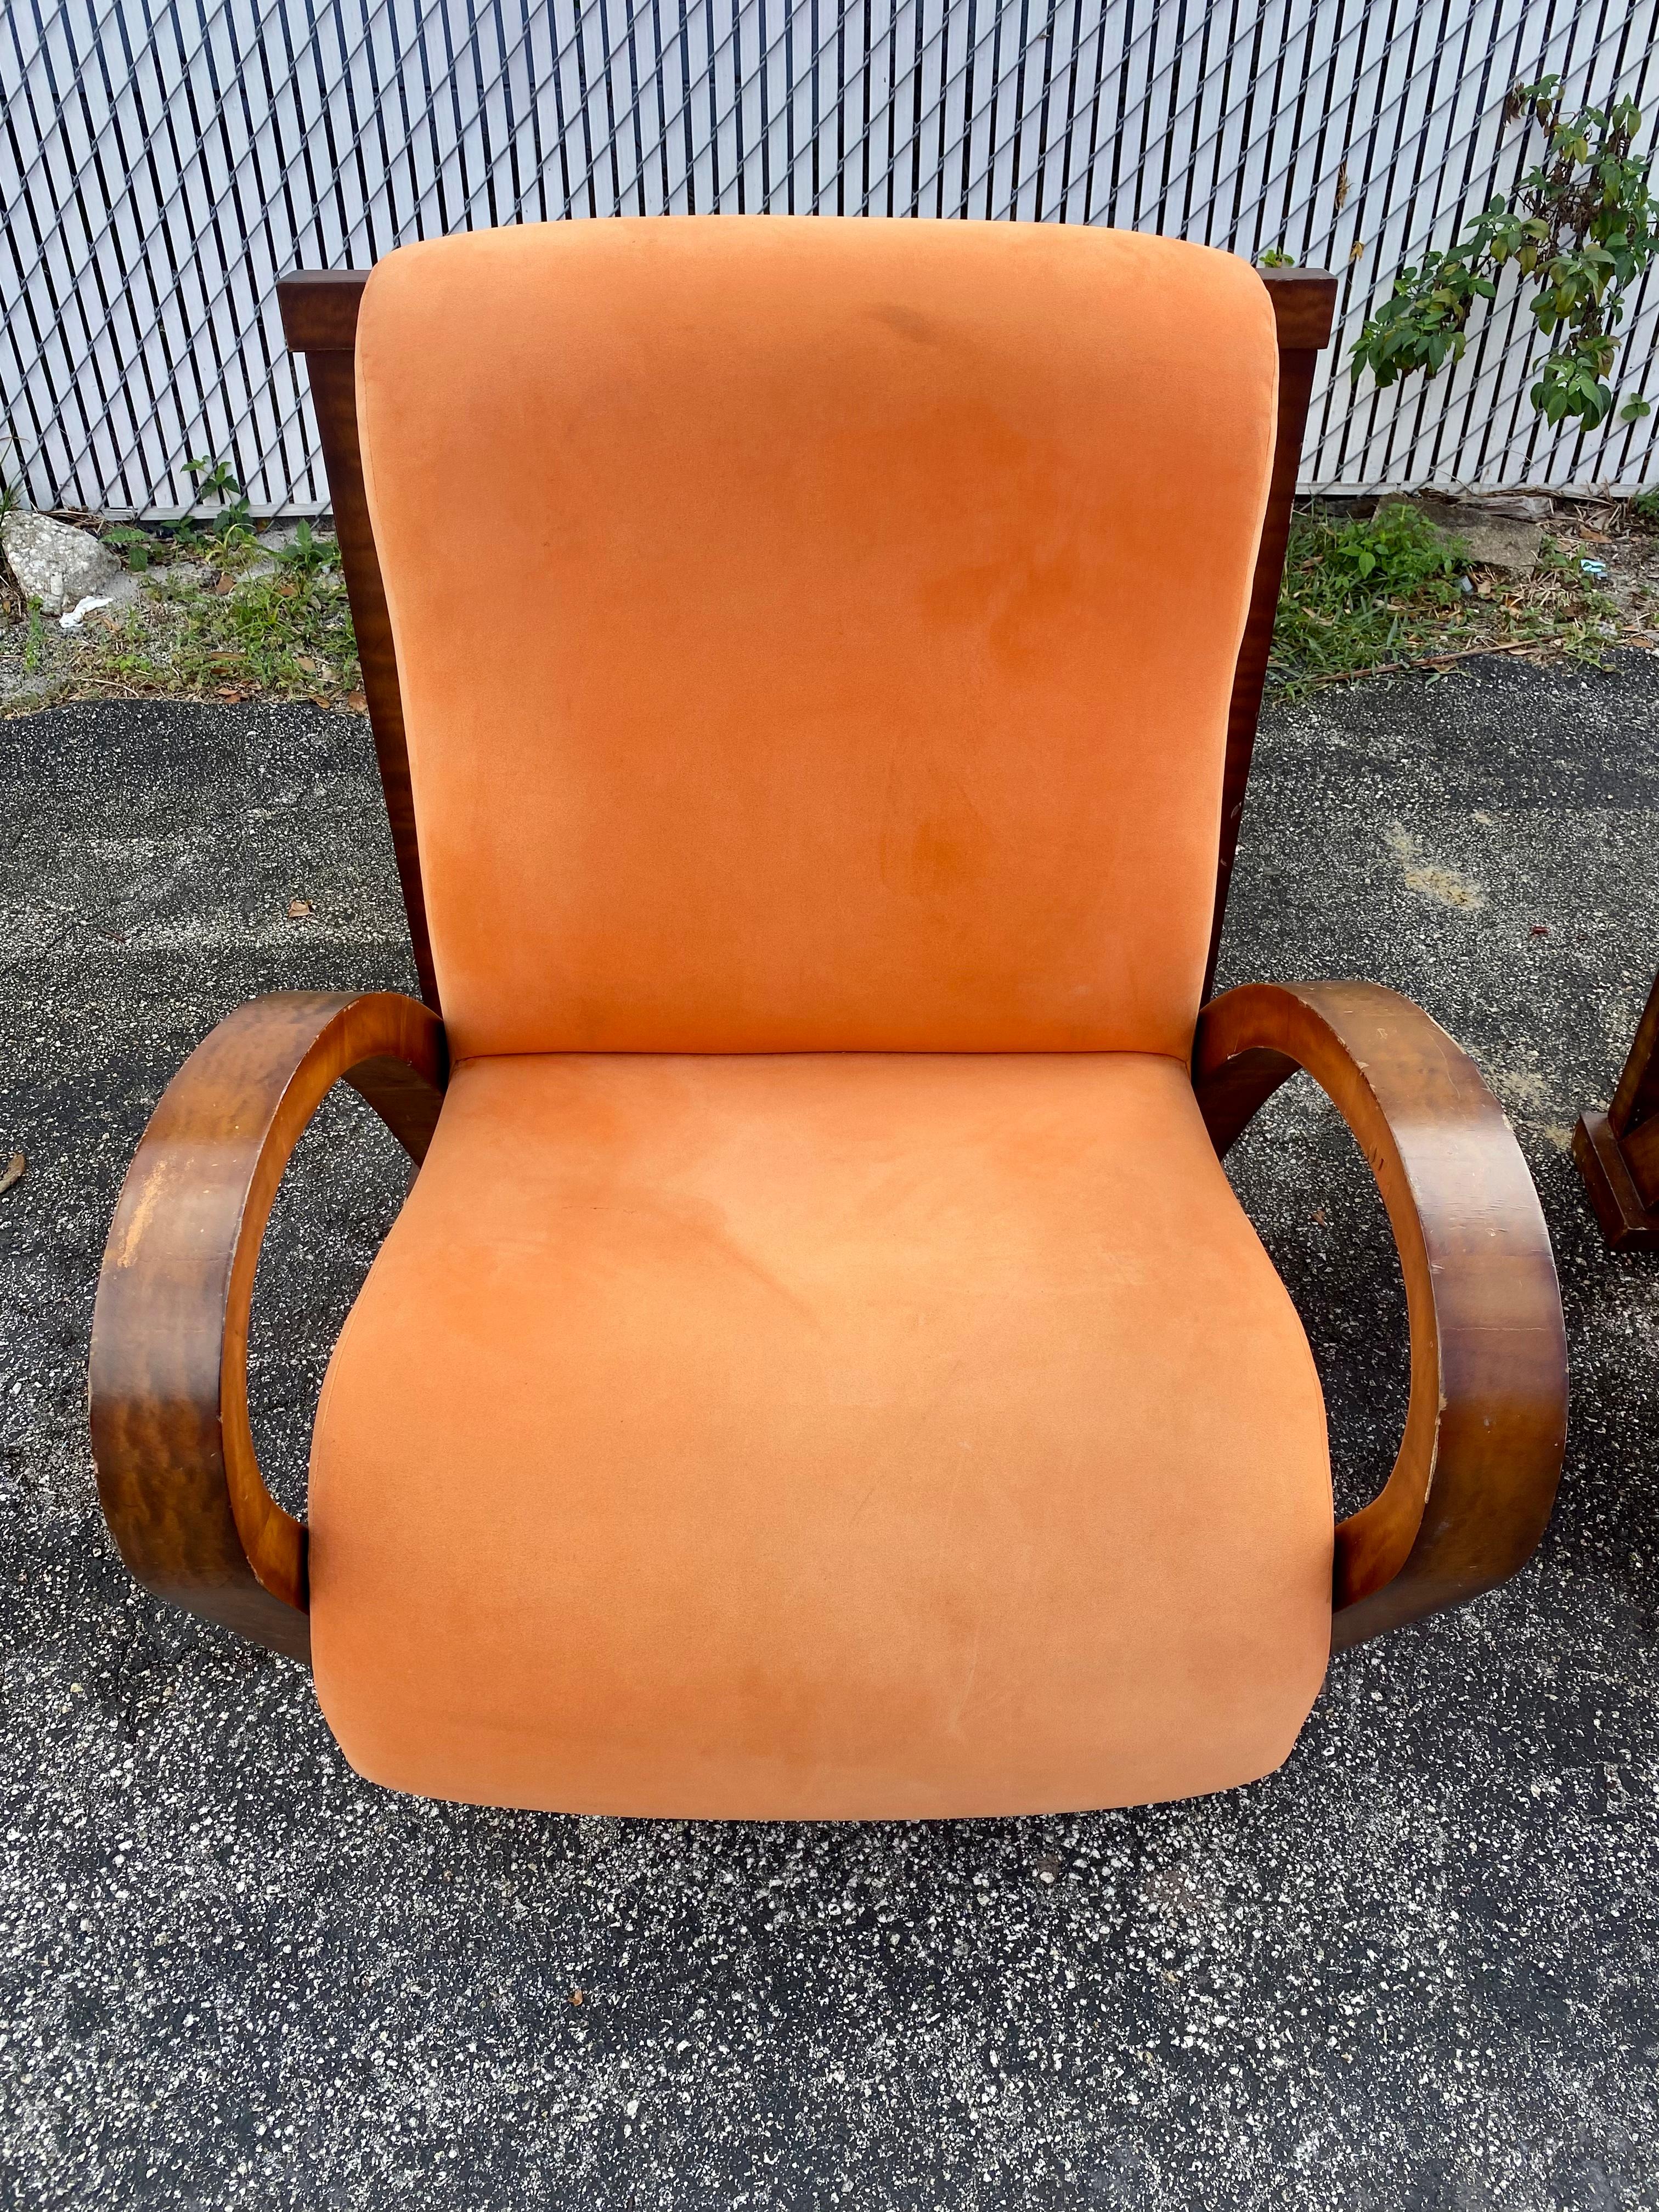 1930s Walnut Orange Art Deco Bentwood Chairs, Set of 2 For Sale 4